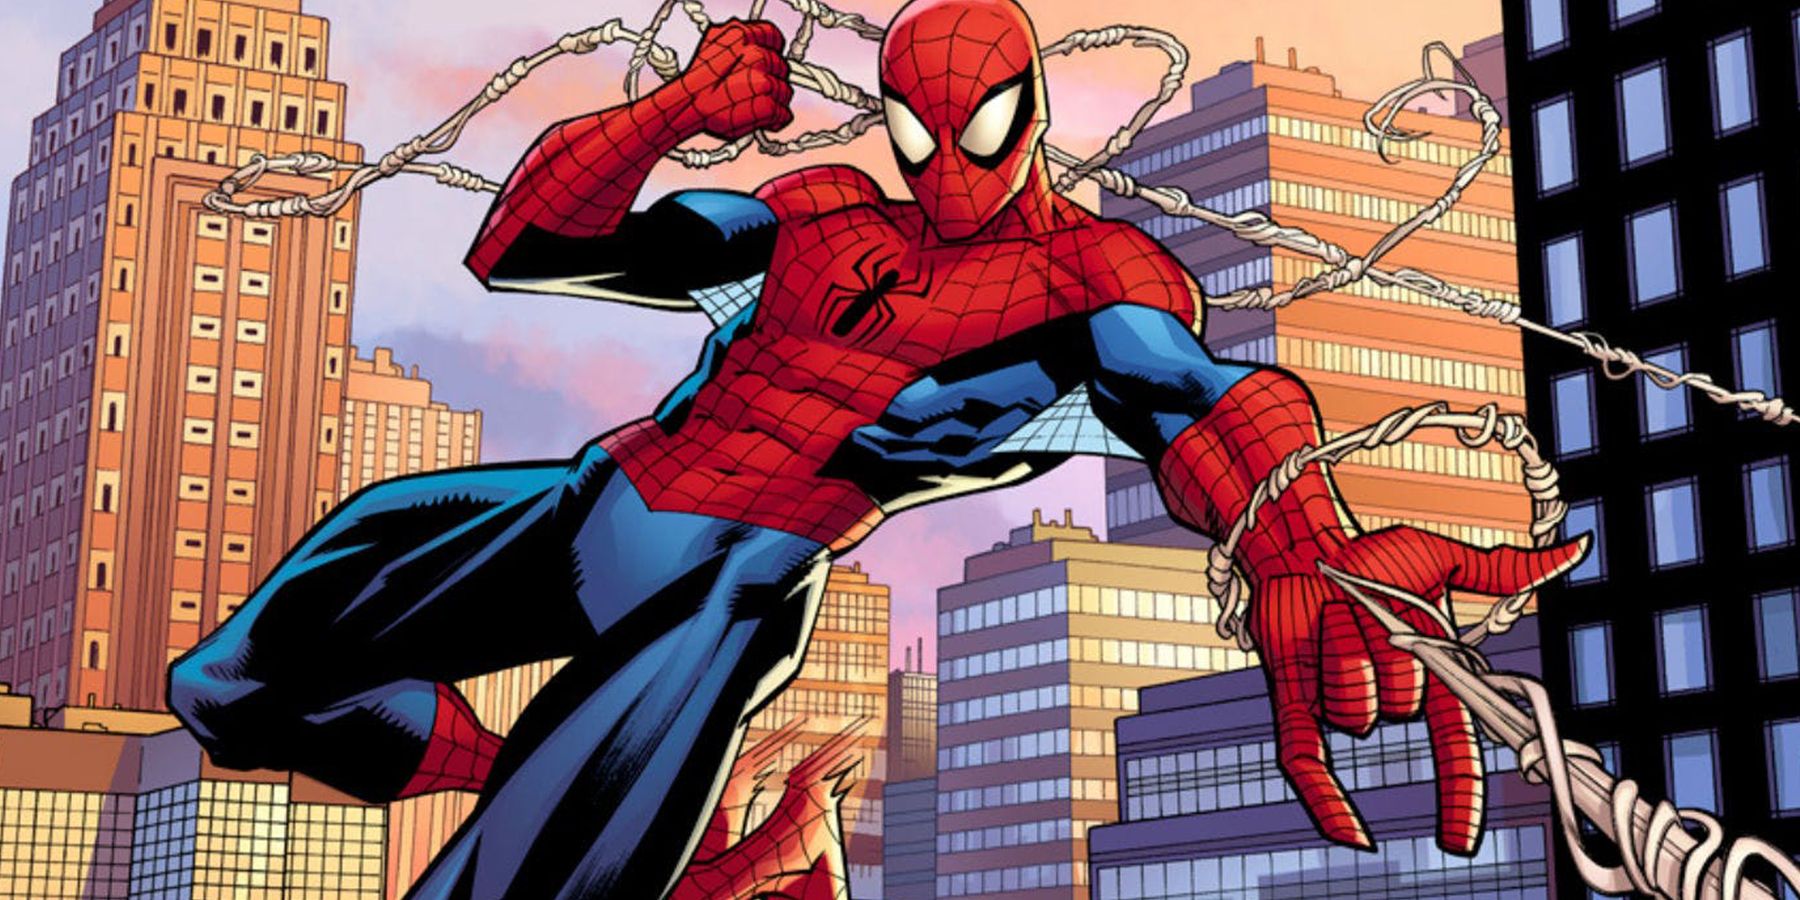 Spider-Man swinging through the city